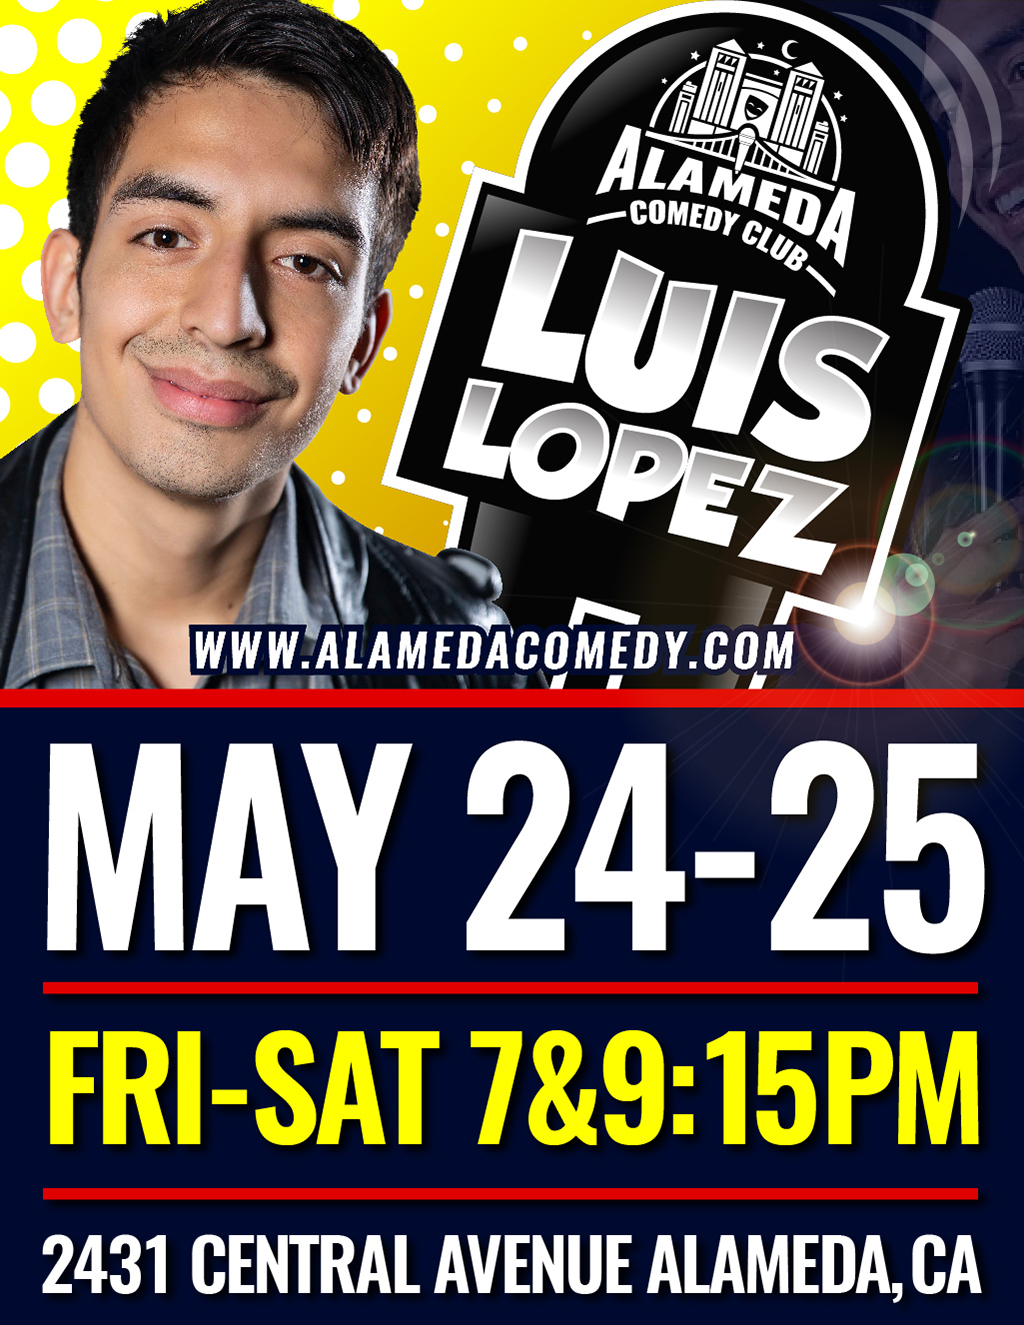 Alameda Comedy Club The Best Comedy Show in Alameda  May 24 25 promotion flier on Digifli com